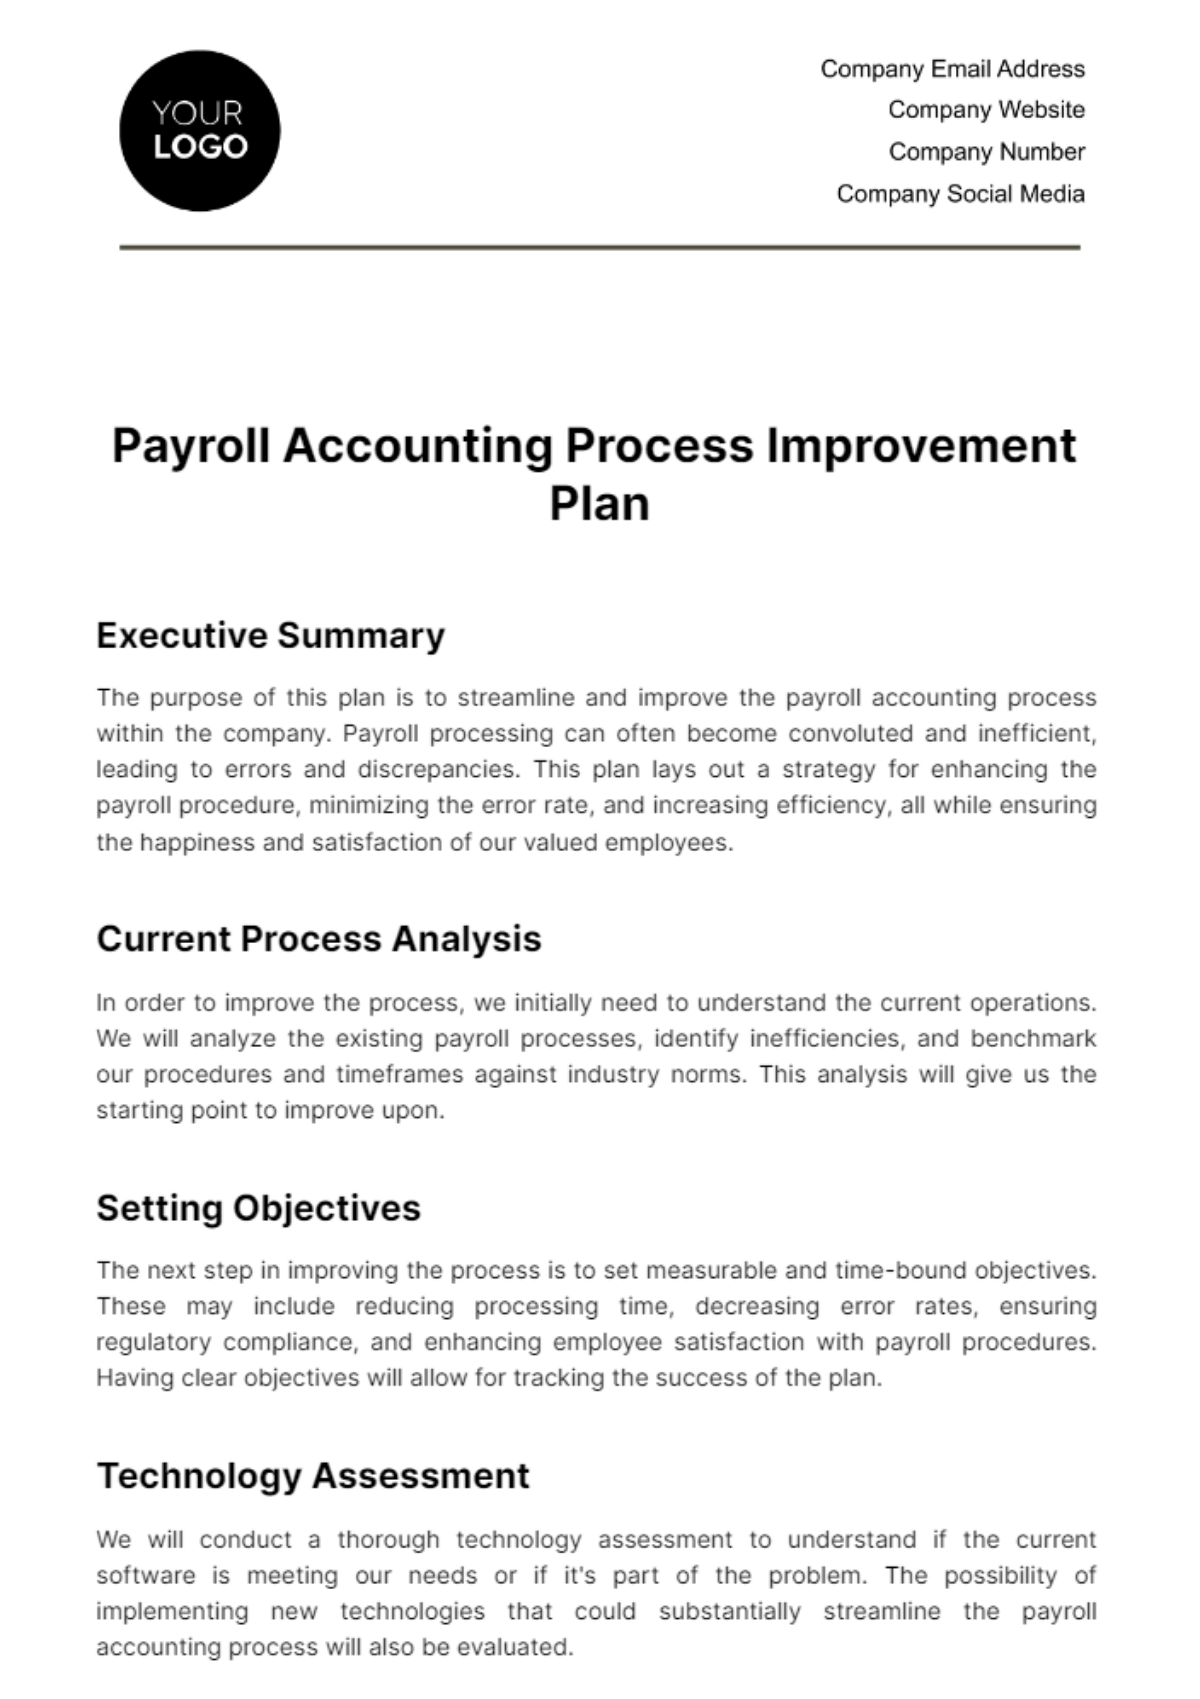 Free Payroll Accounting Process Improvement Plan Template